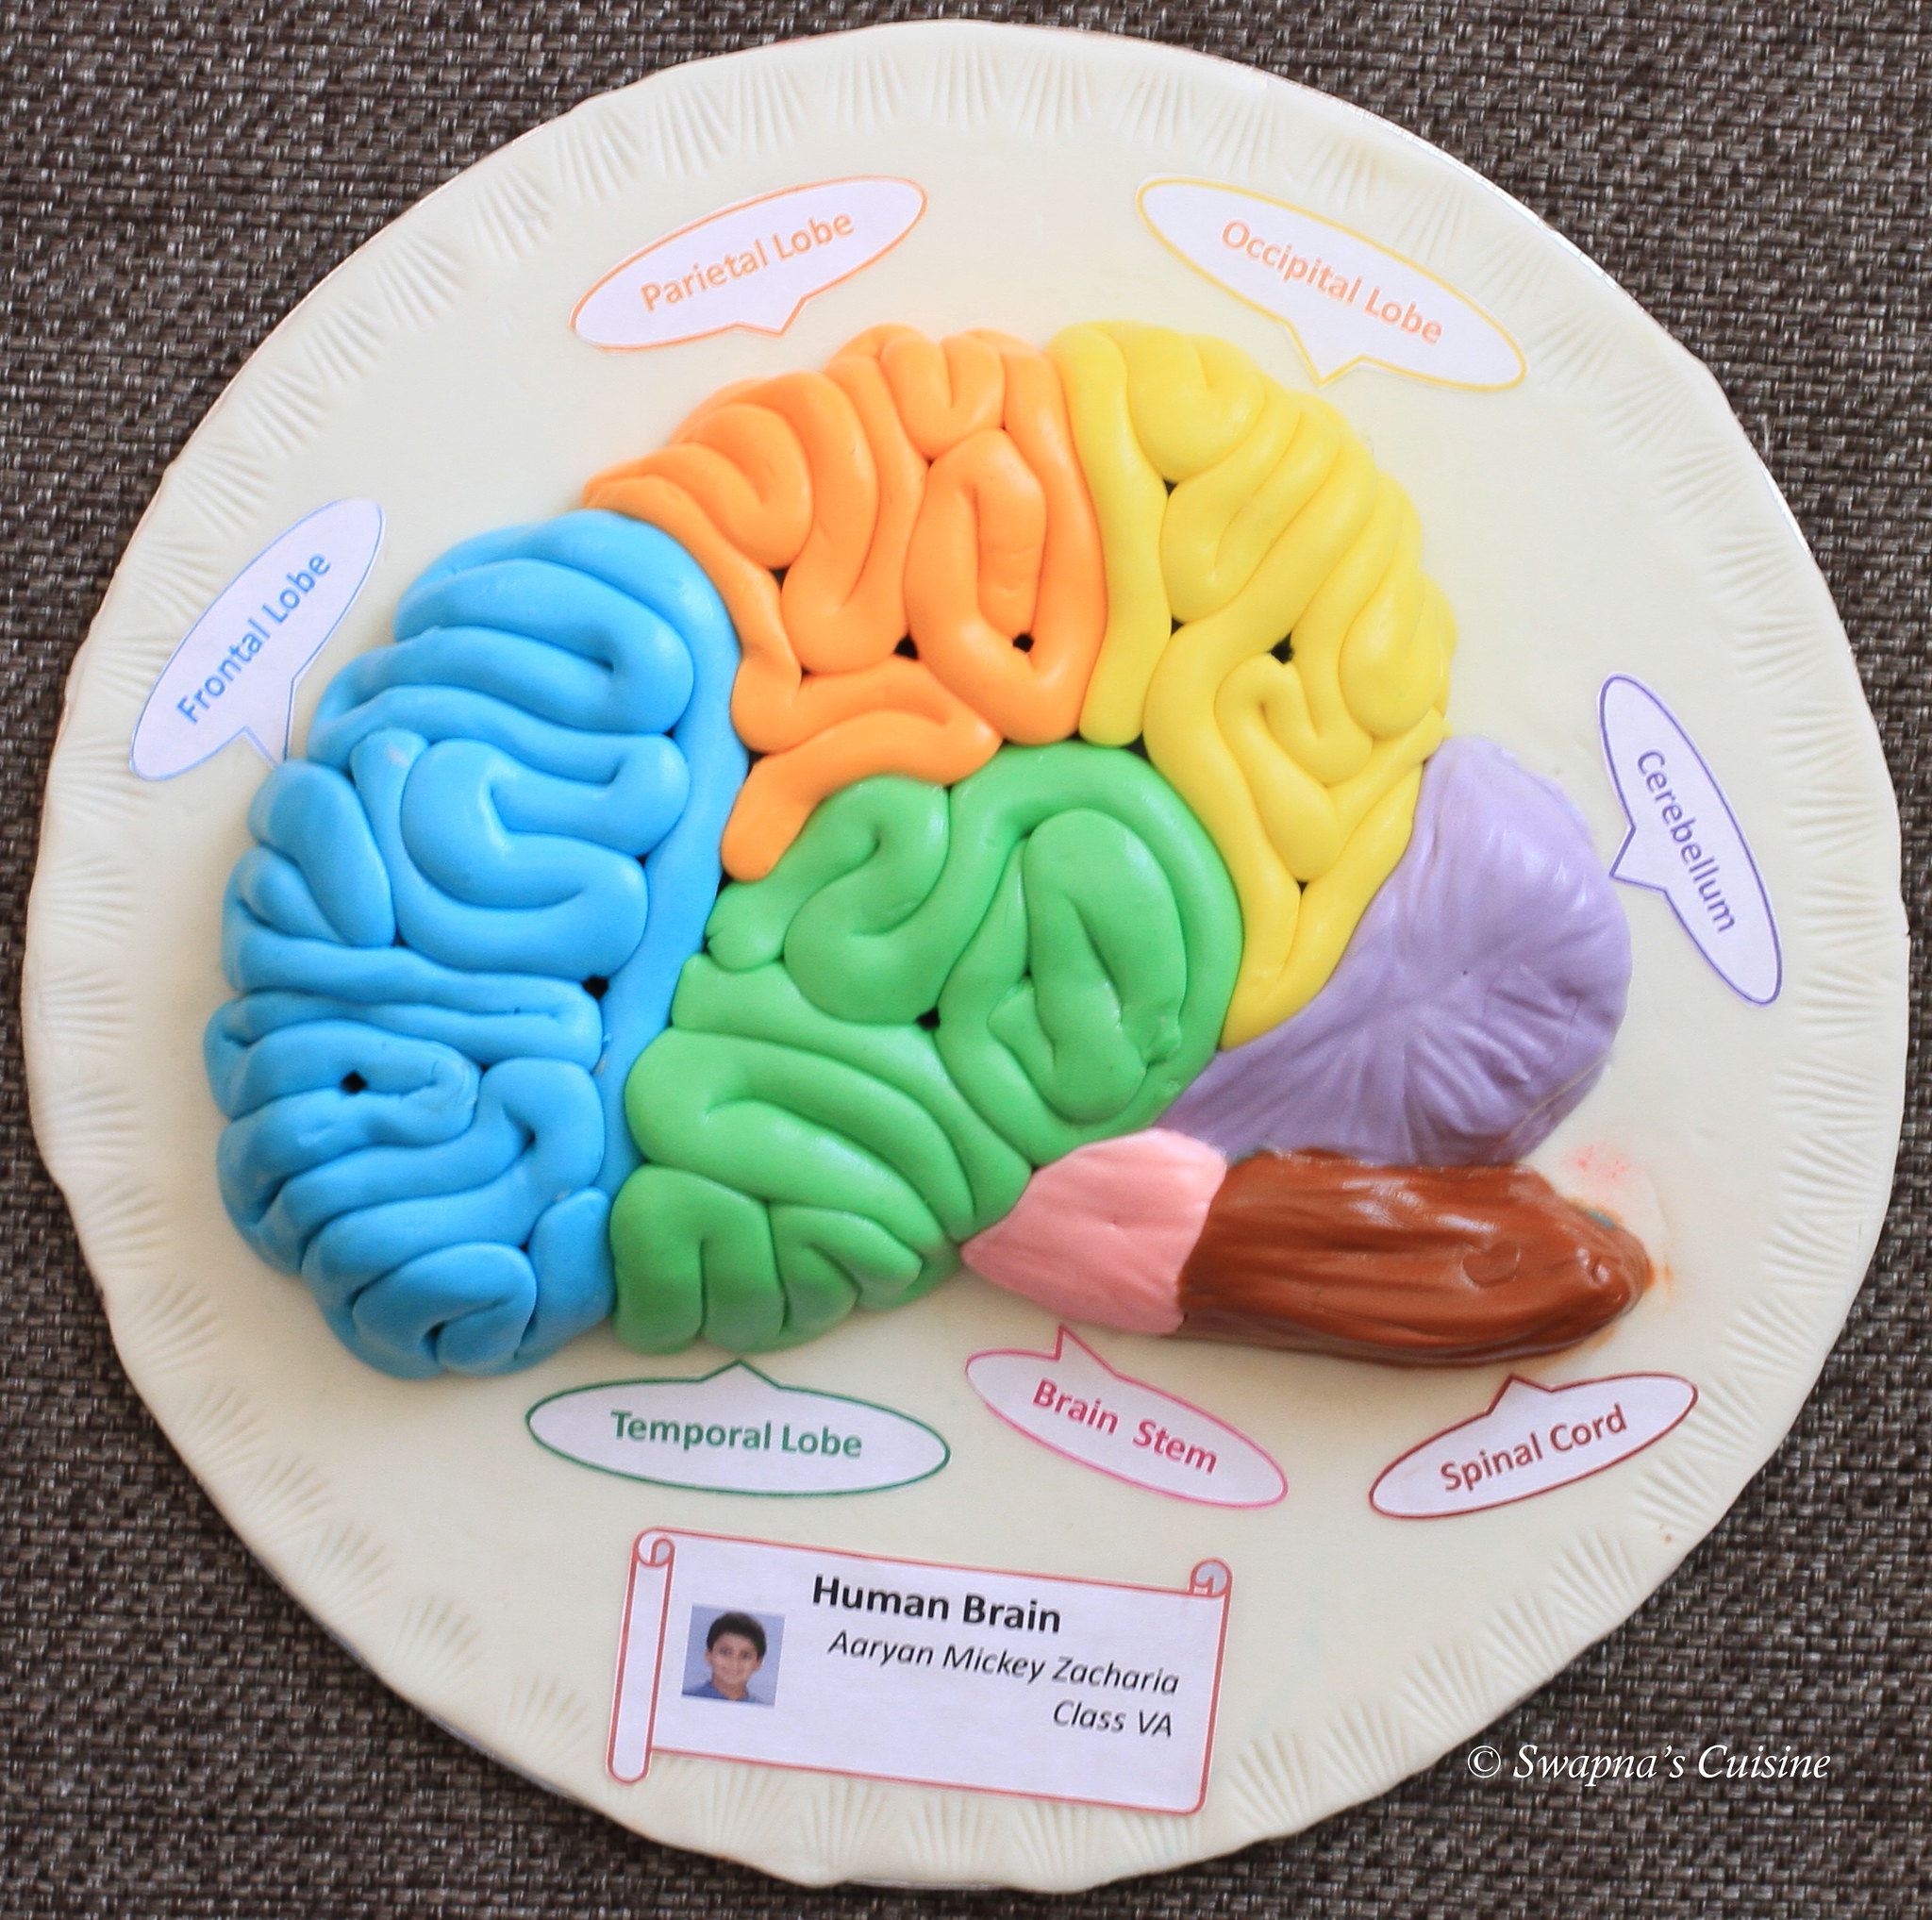 Swapna's Cuisine: Model of Human Brain with Fondant